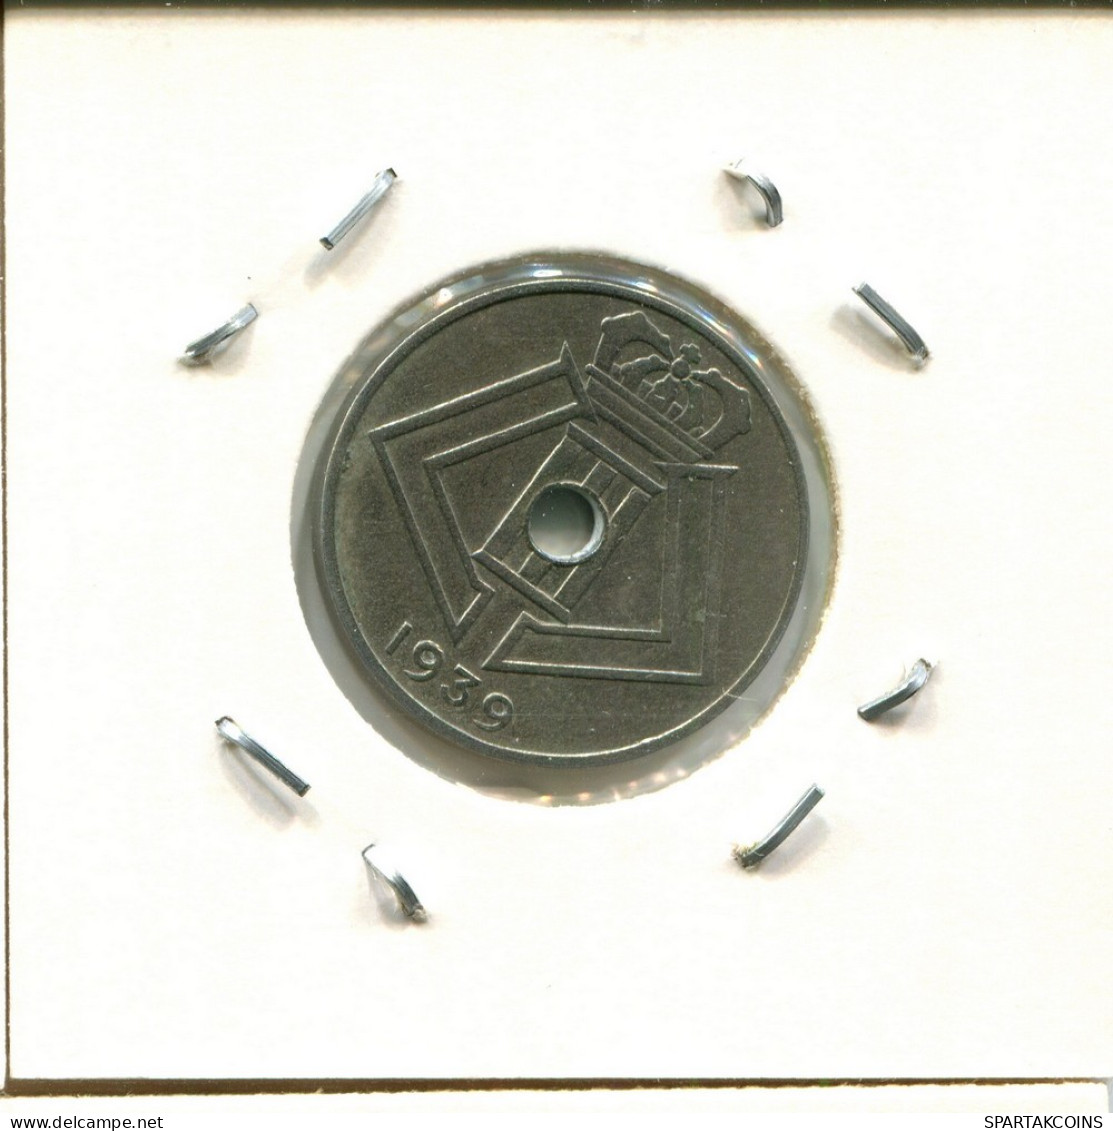 10 CENTIMES 1939 BELGIQUE-BELGIE BÉLGICA BELGIUM Moneda #BA299.E - 10 Cent